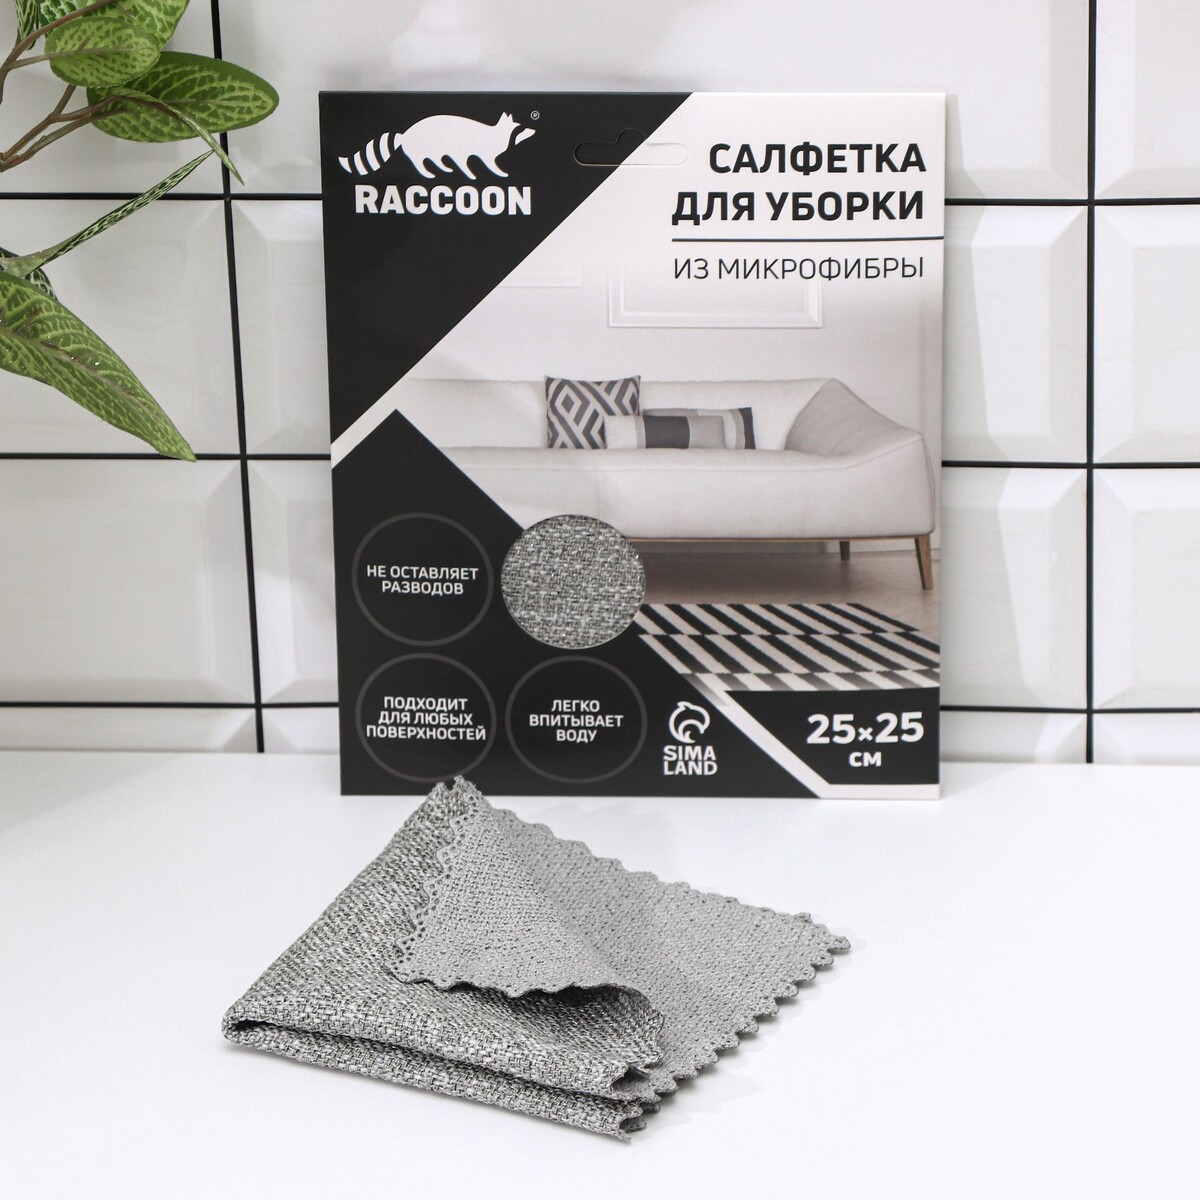 Салфетка микрофибра raccoon салфетка бытовая для уборки микрофибра 30х30 см умничка